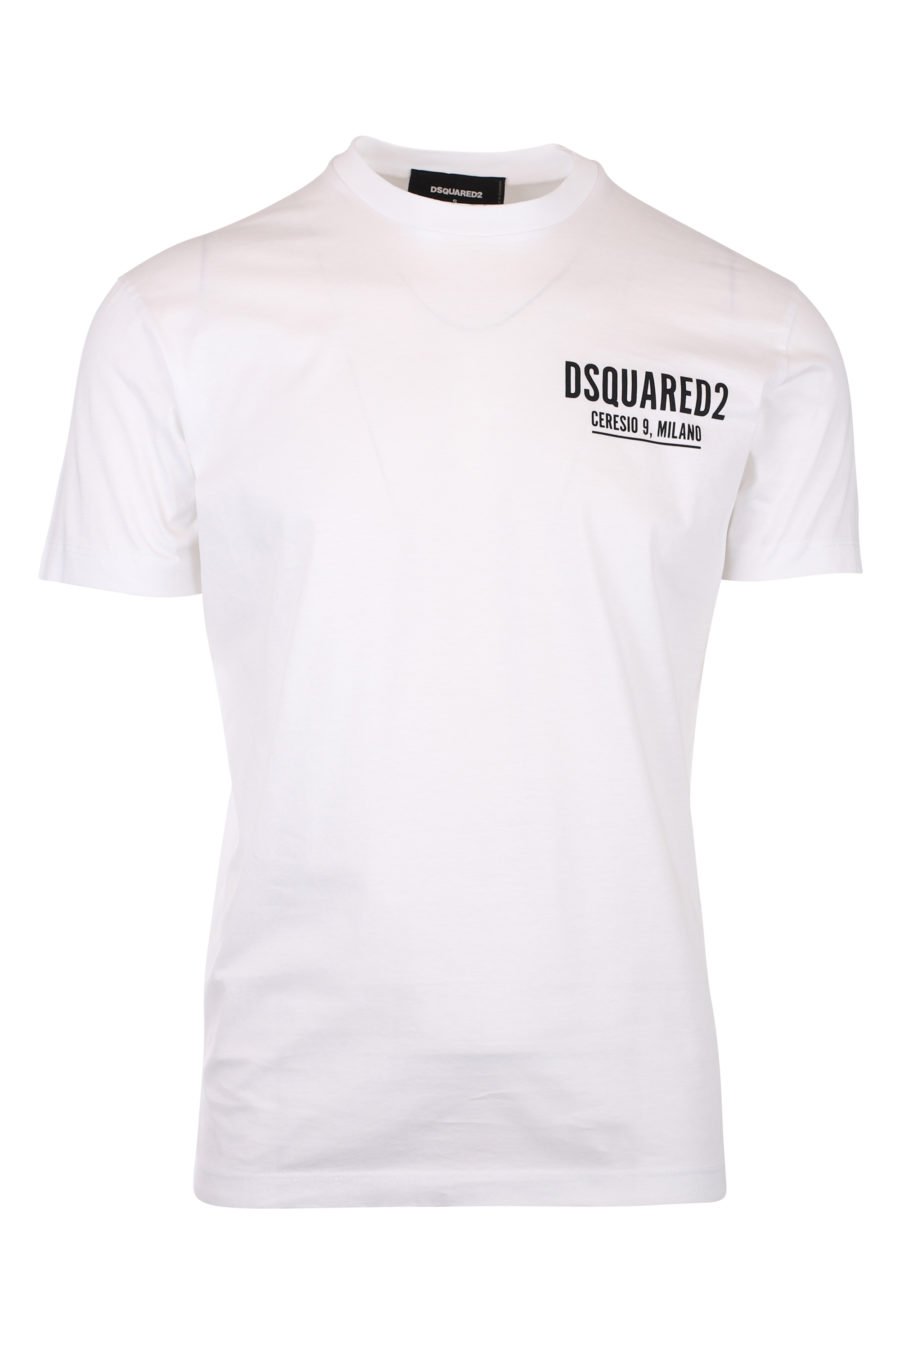 T-shirt branca com pequeno logótipo ceresio 9 - IMG 9784